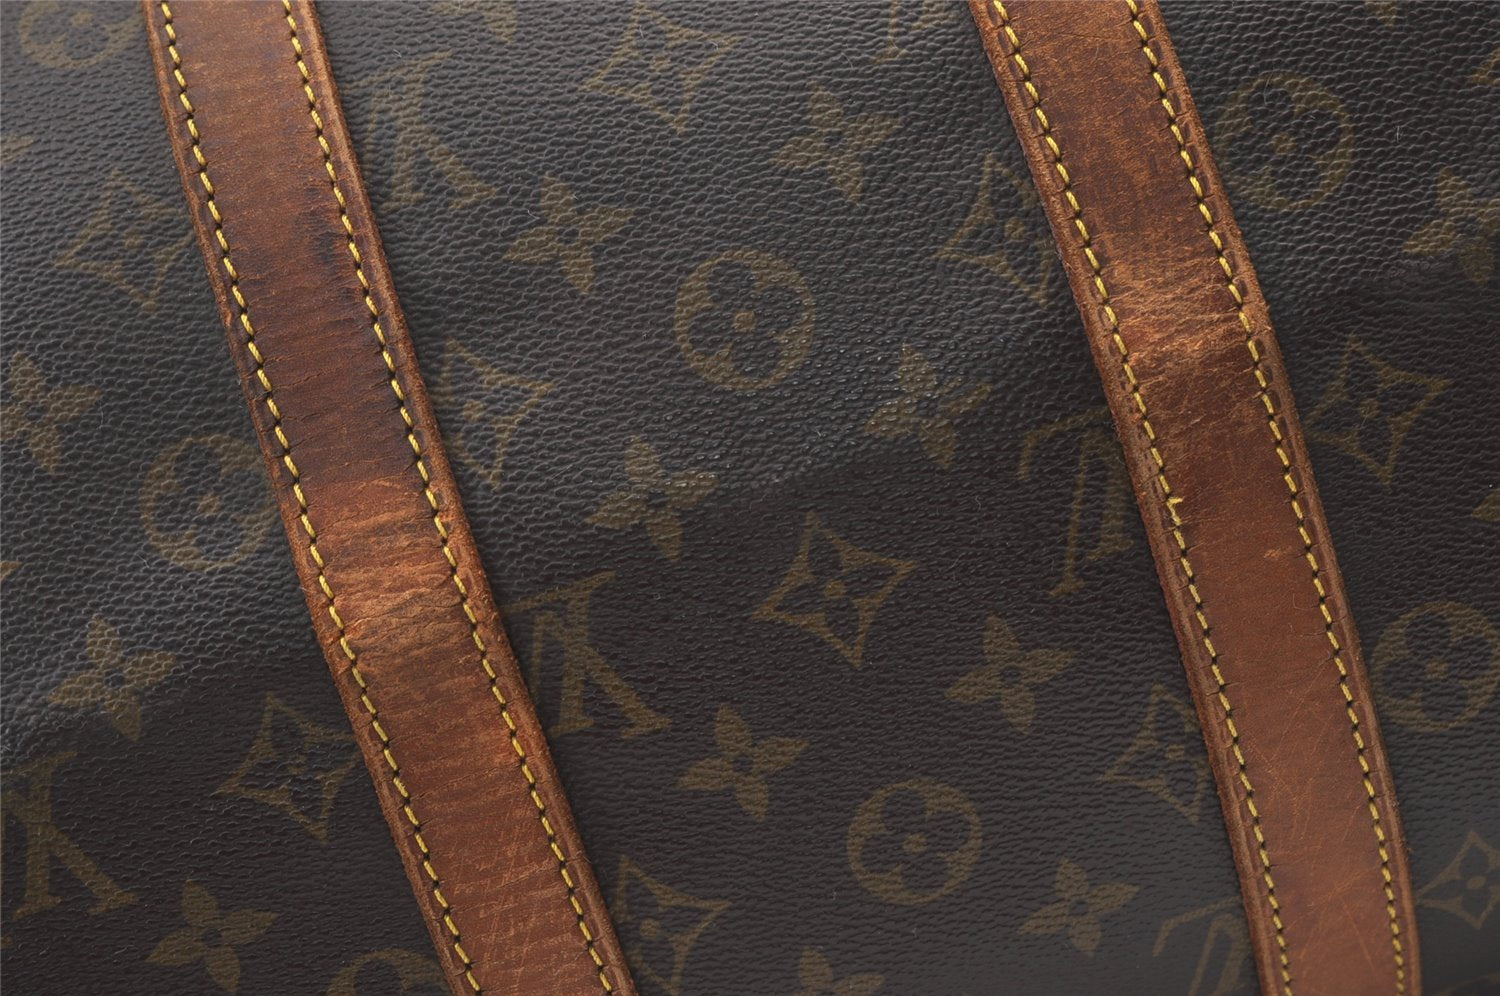 Authentic Louis Vuitton Monogram Keepall 45 Travel Boston Bag M41428 LV 5286J